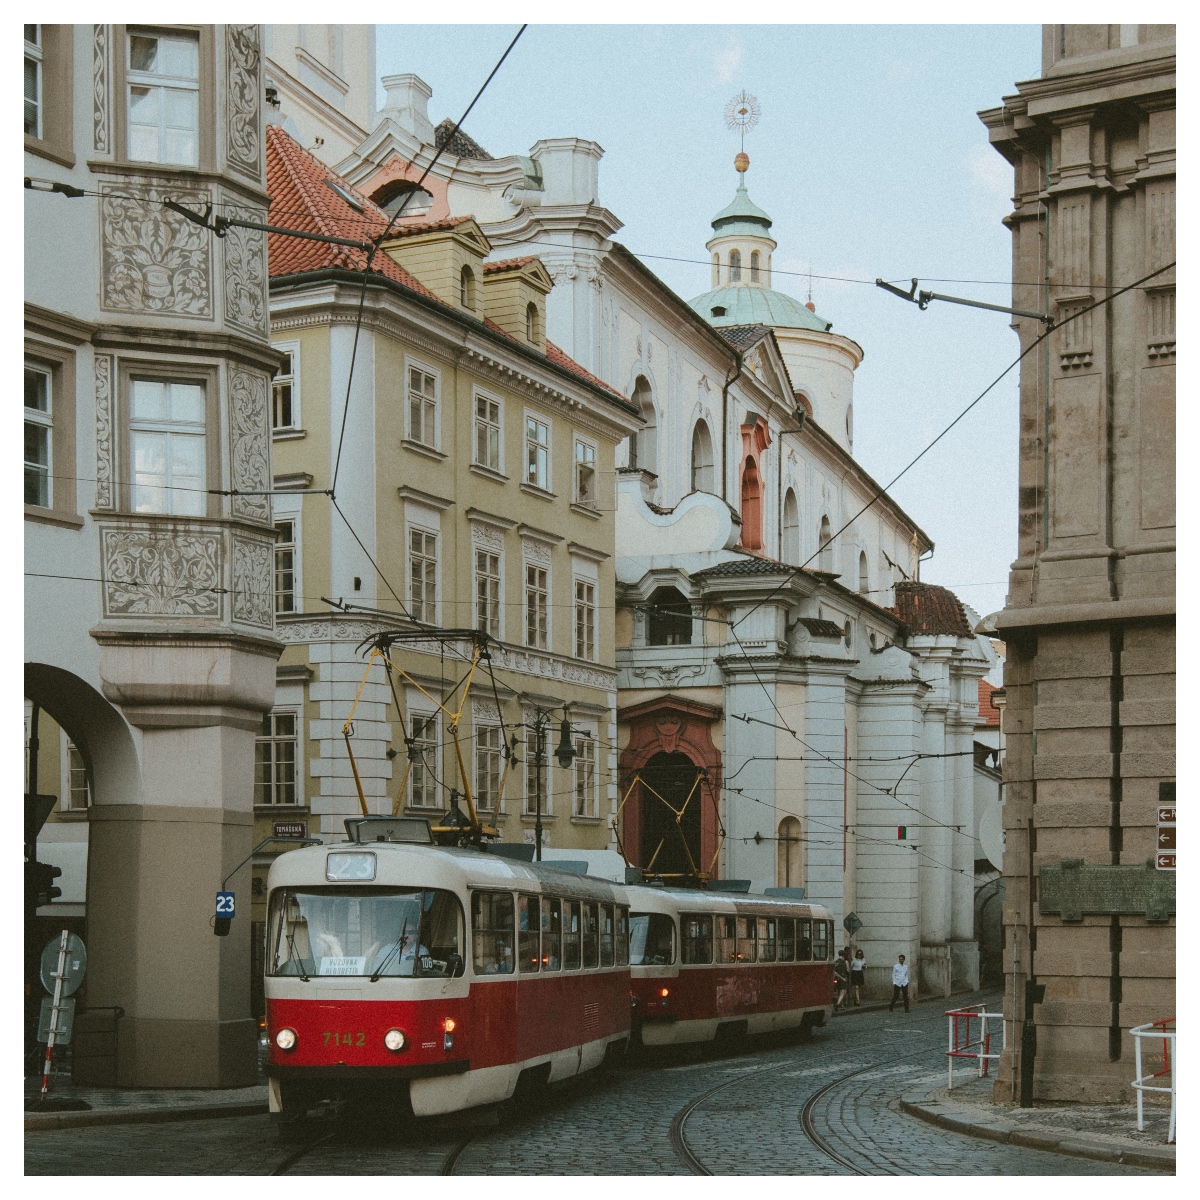 Rode tram traveller populaire insta filter